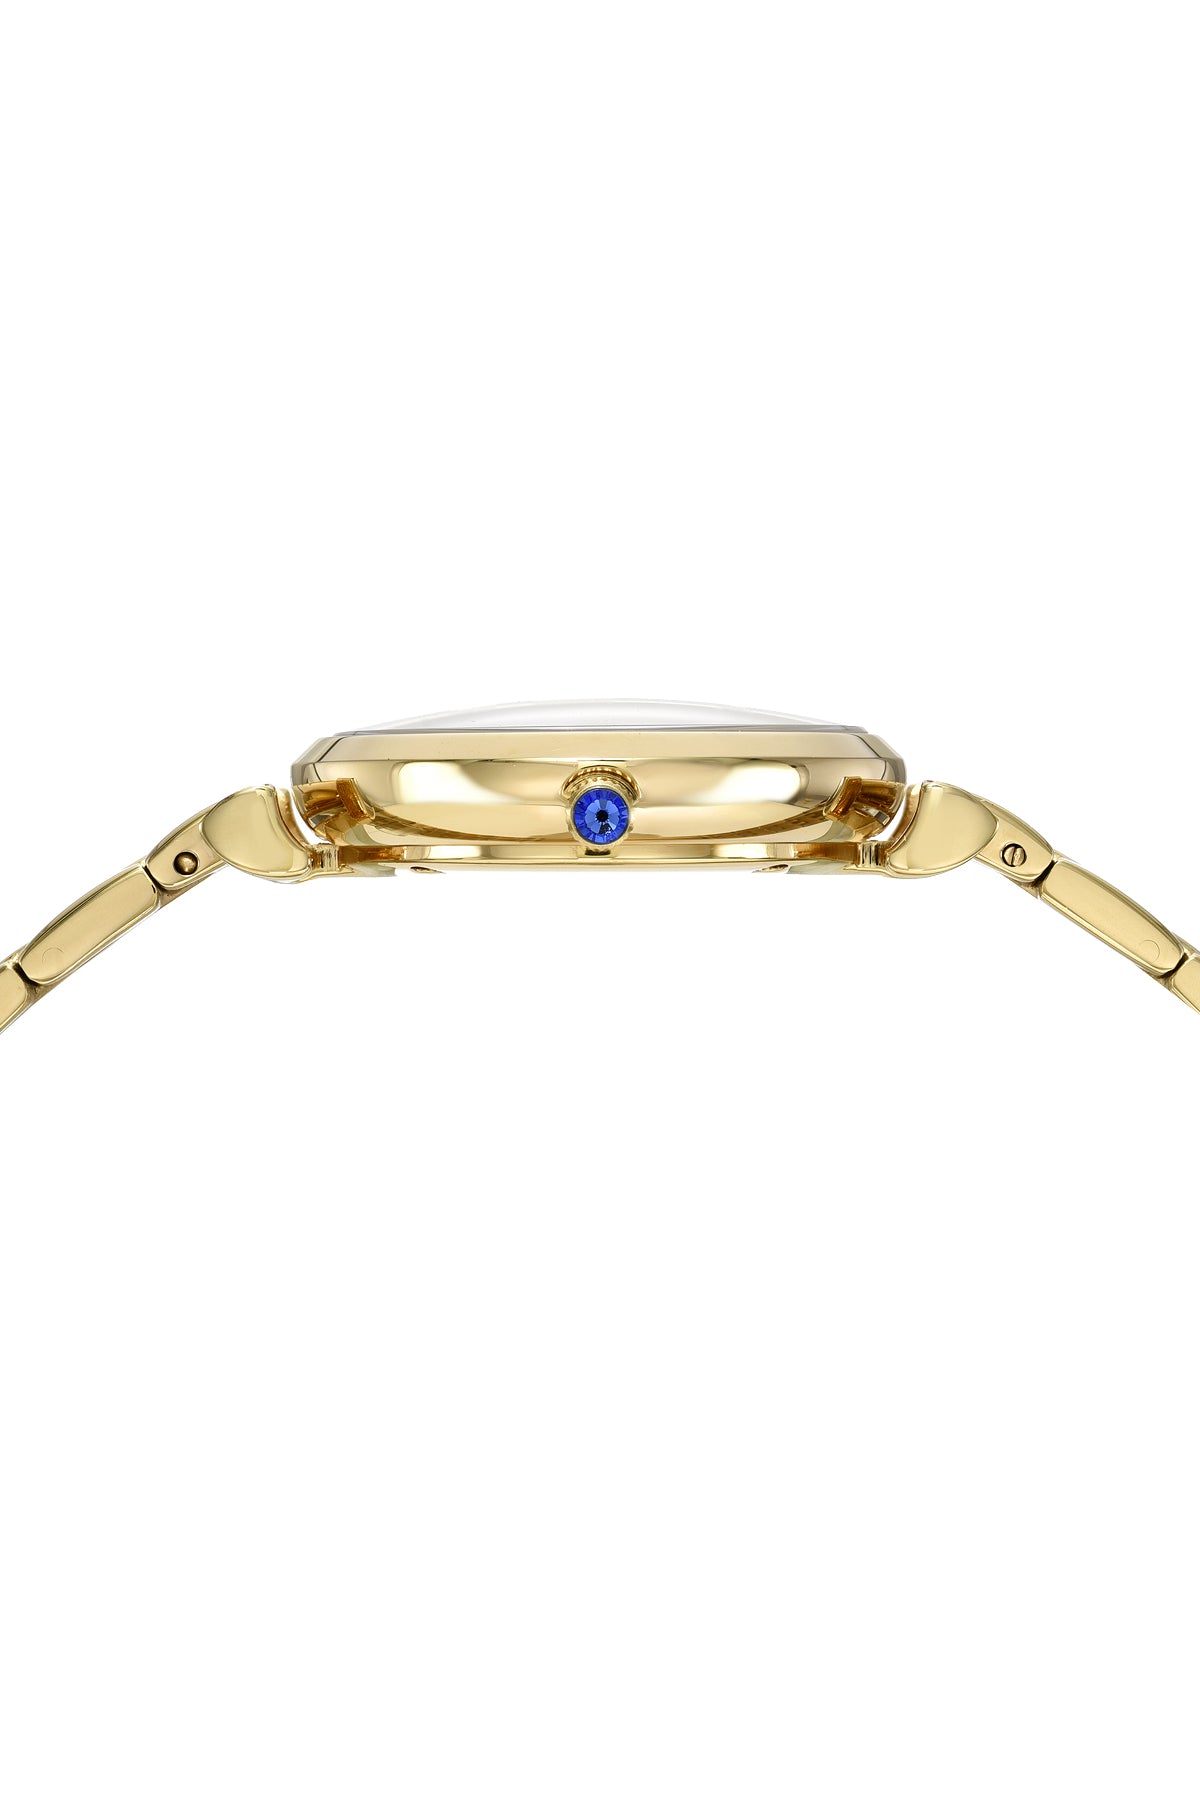 Porsamo Bleu Sylvie Luxury Women's Stainless Steel Watch, Gold, Abalone Dial 1131BSYS